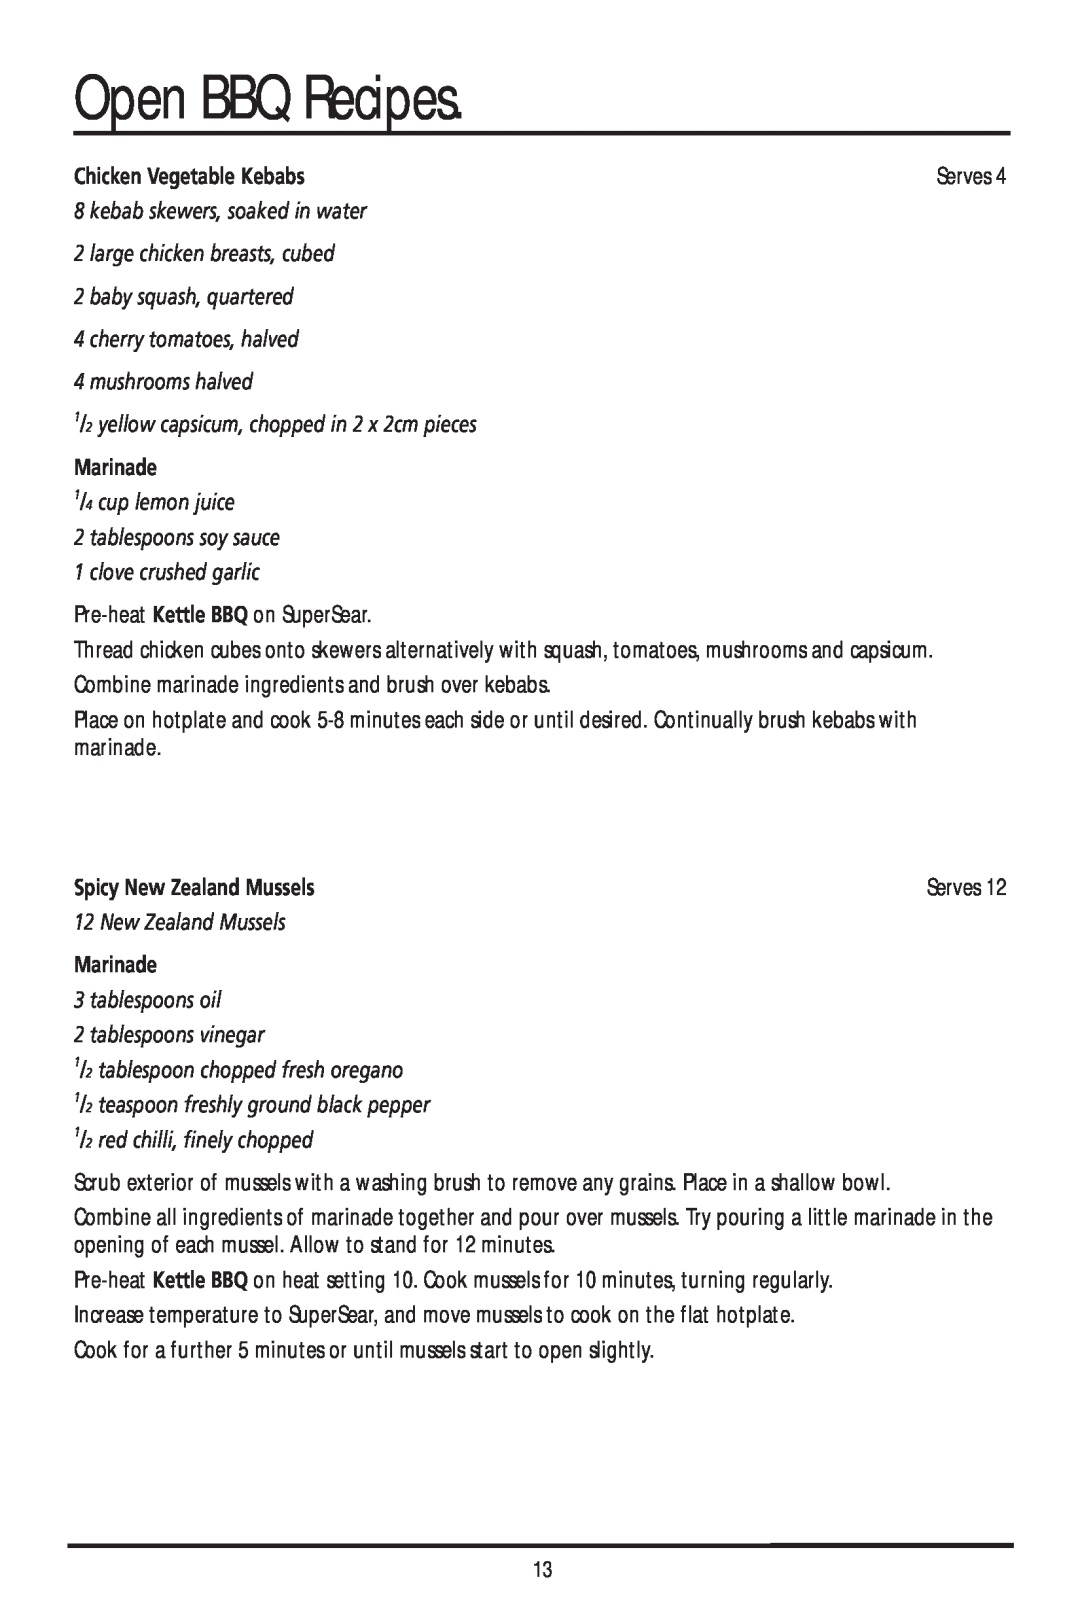 Sunbeam HG5400 manual Open BBQ Recipes, Chicken Vegetable Kebabs, Marinade, Spicy New Zealand Mussels 